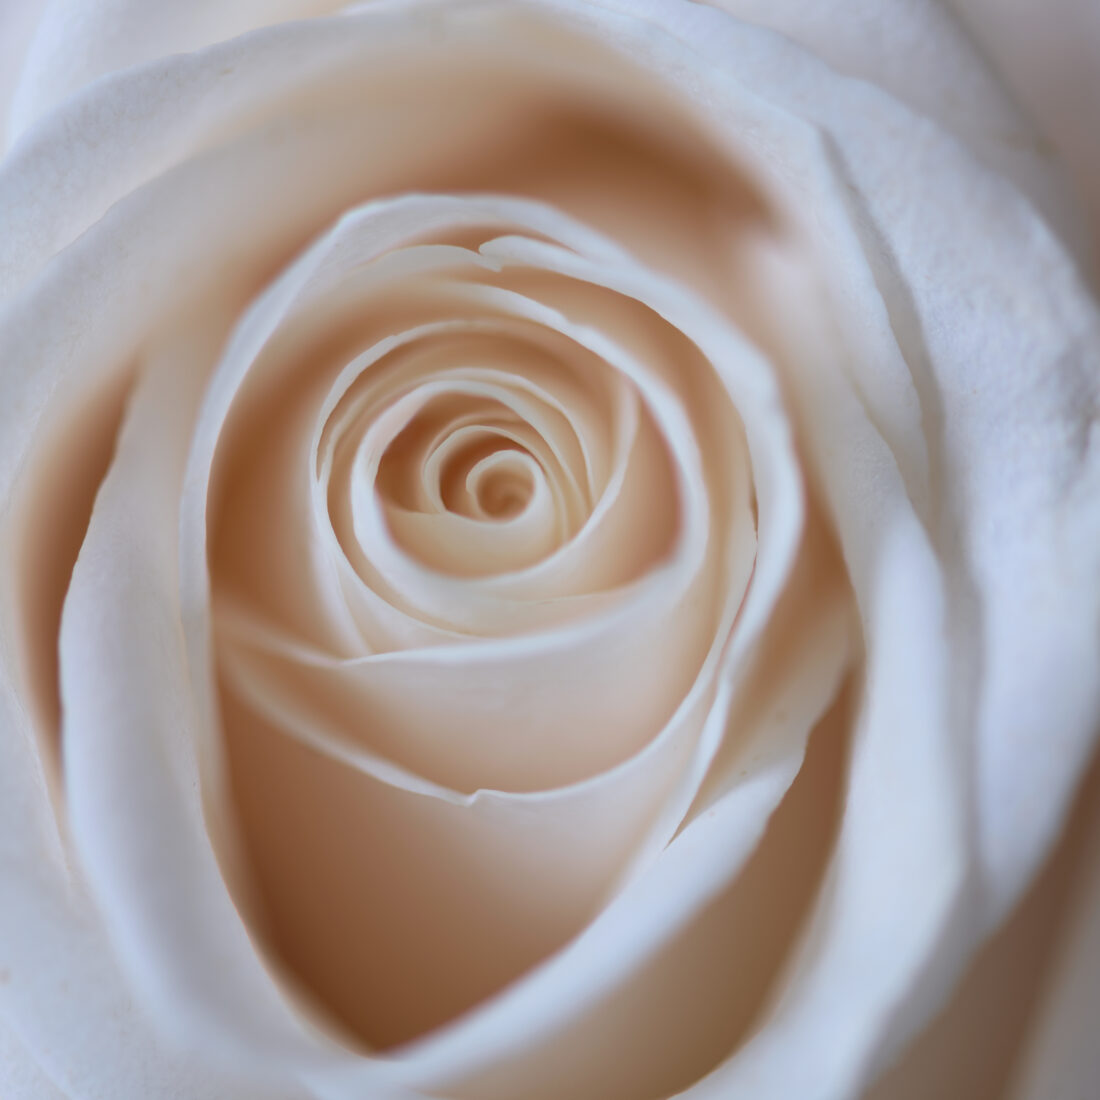 Free stock image of Pink Rose Close up